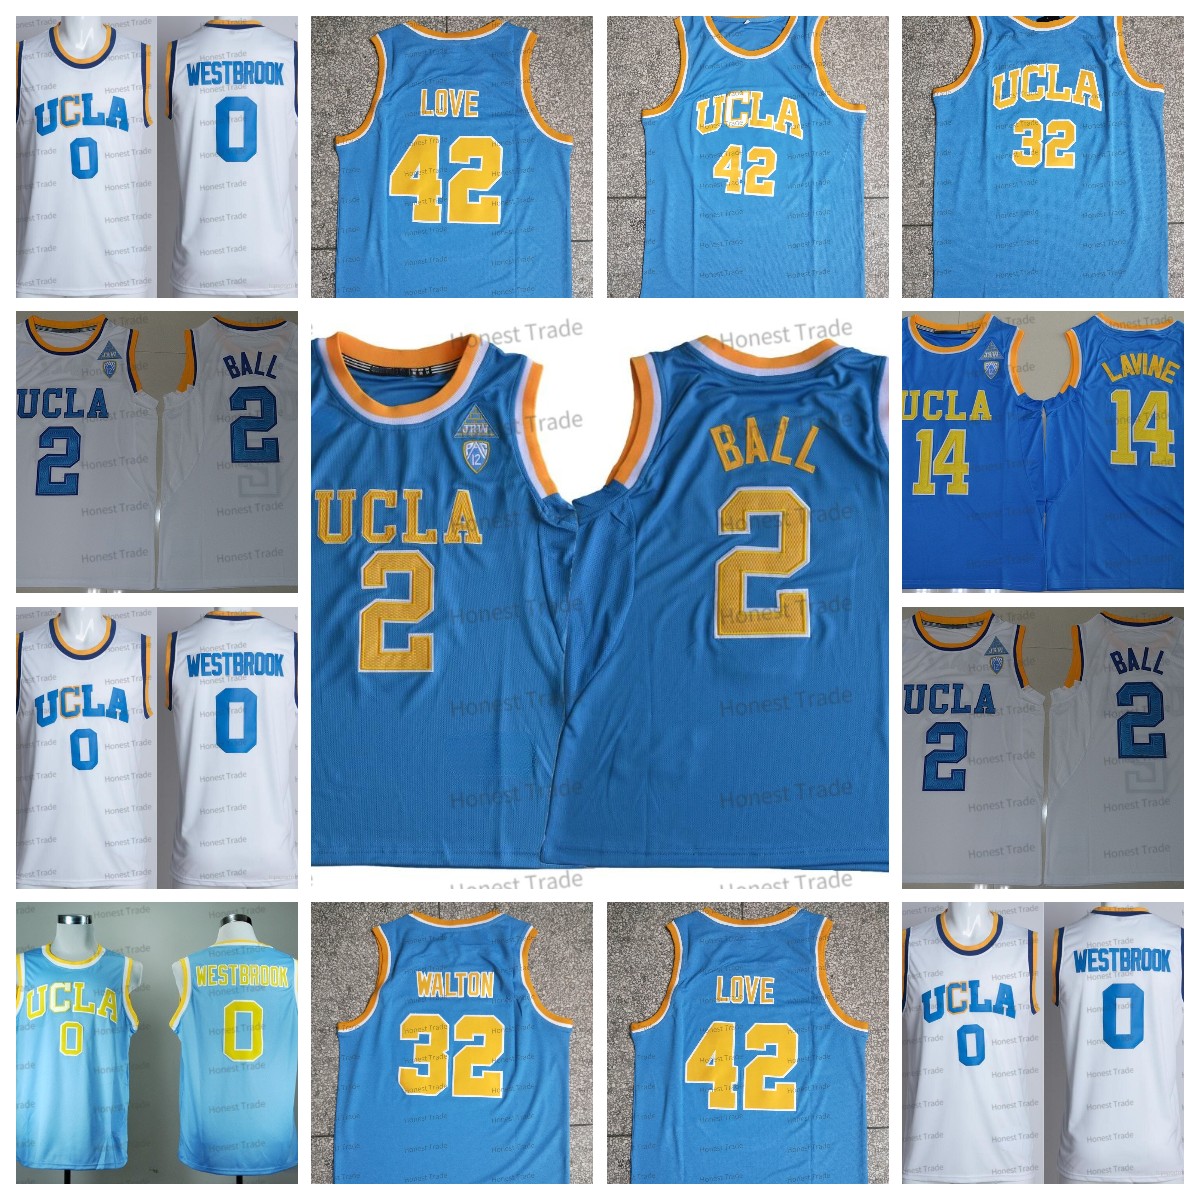 

NCAA UCLA 42 Kevin Love Bill Walton Mens Basketball Russell Westbrook Zach LaVine 2 Lonzo Ball college White University Stitched Mens Jerseys, Men jersey